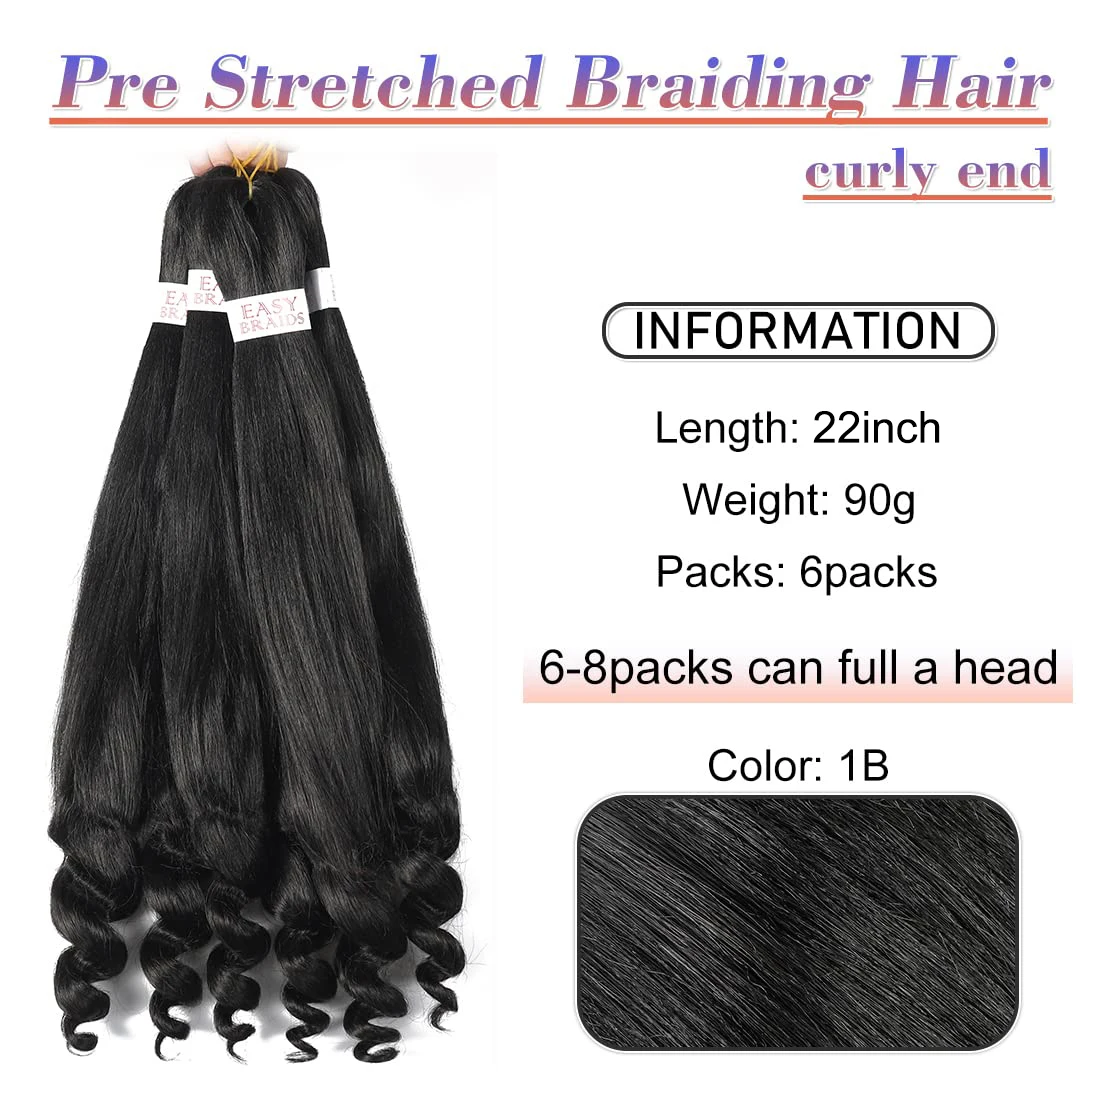 Fine Pack Braiding Hair Pre Stretched - 26 100g/pack Premium